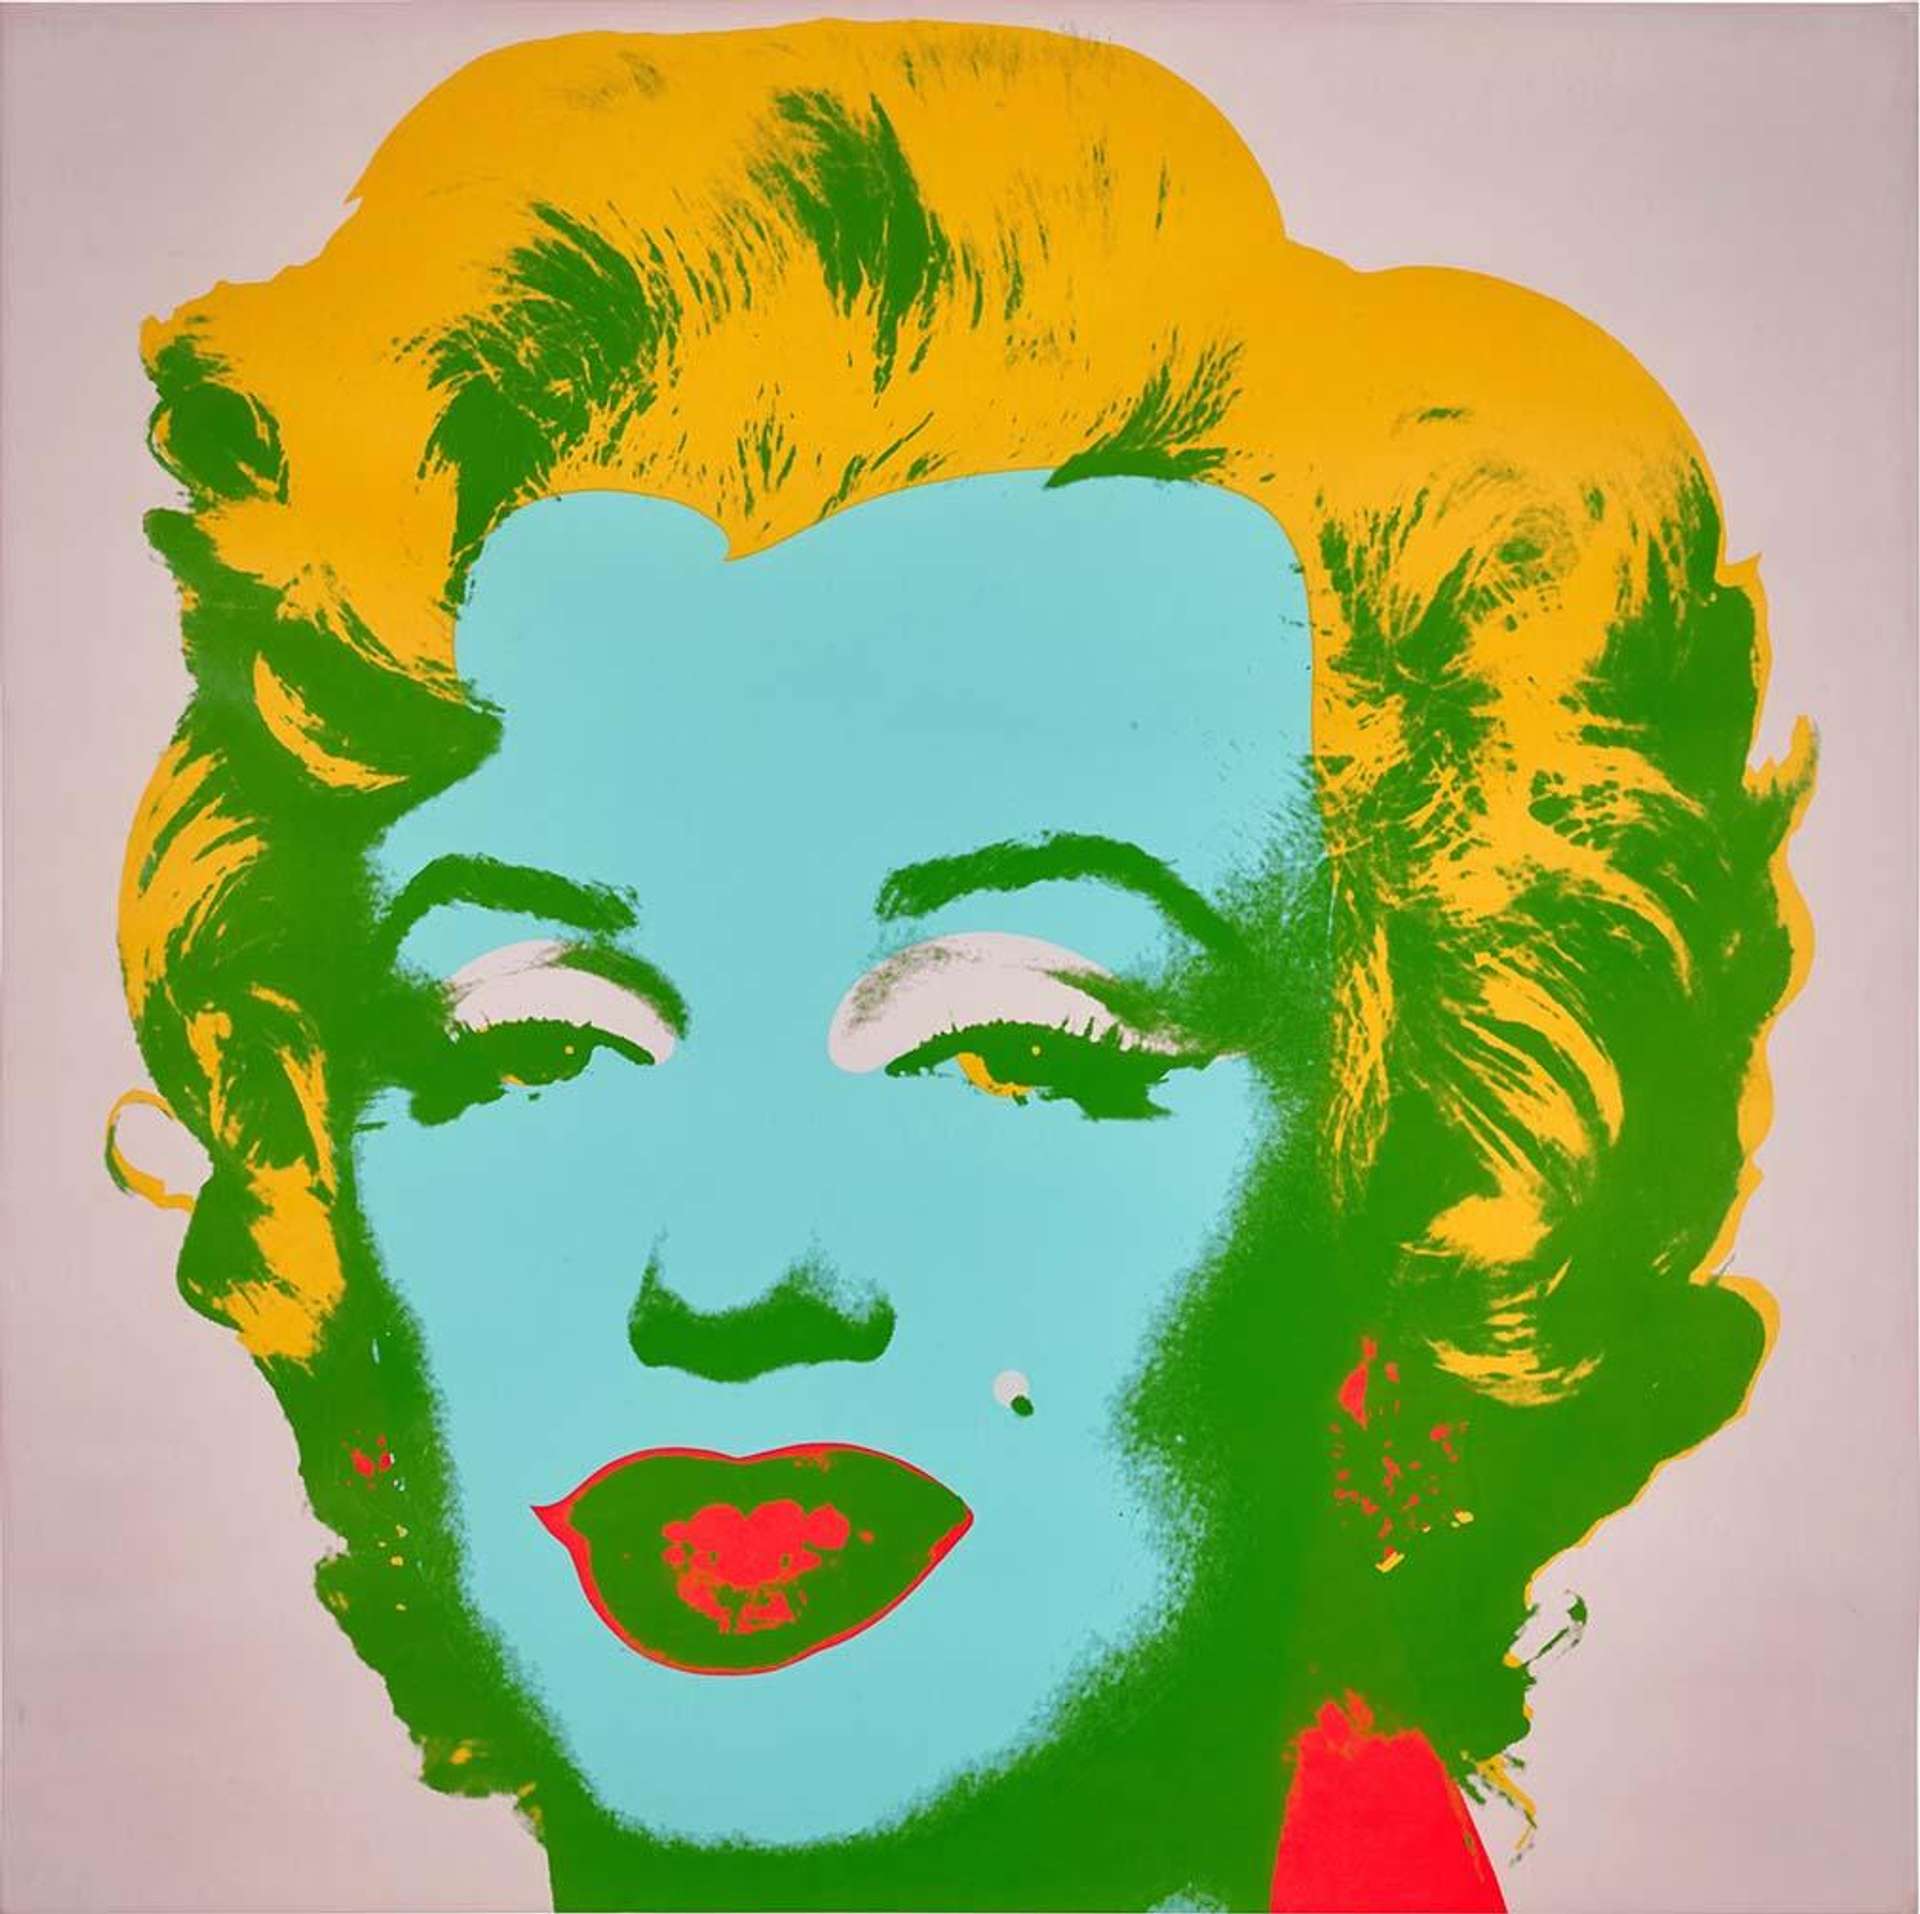 Marilyn Monroe (F & S 11.28) by Andy Warhol